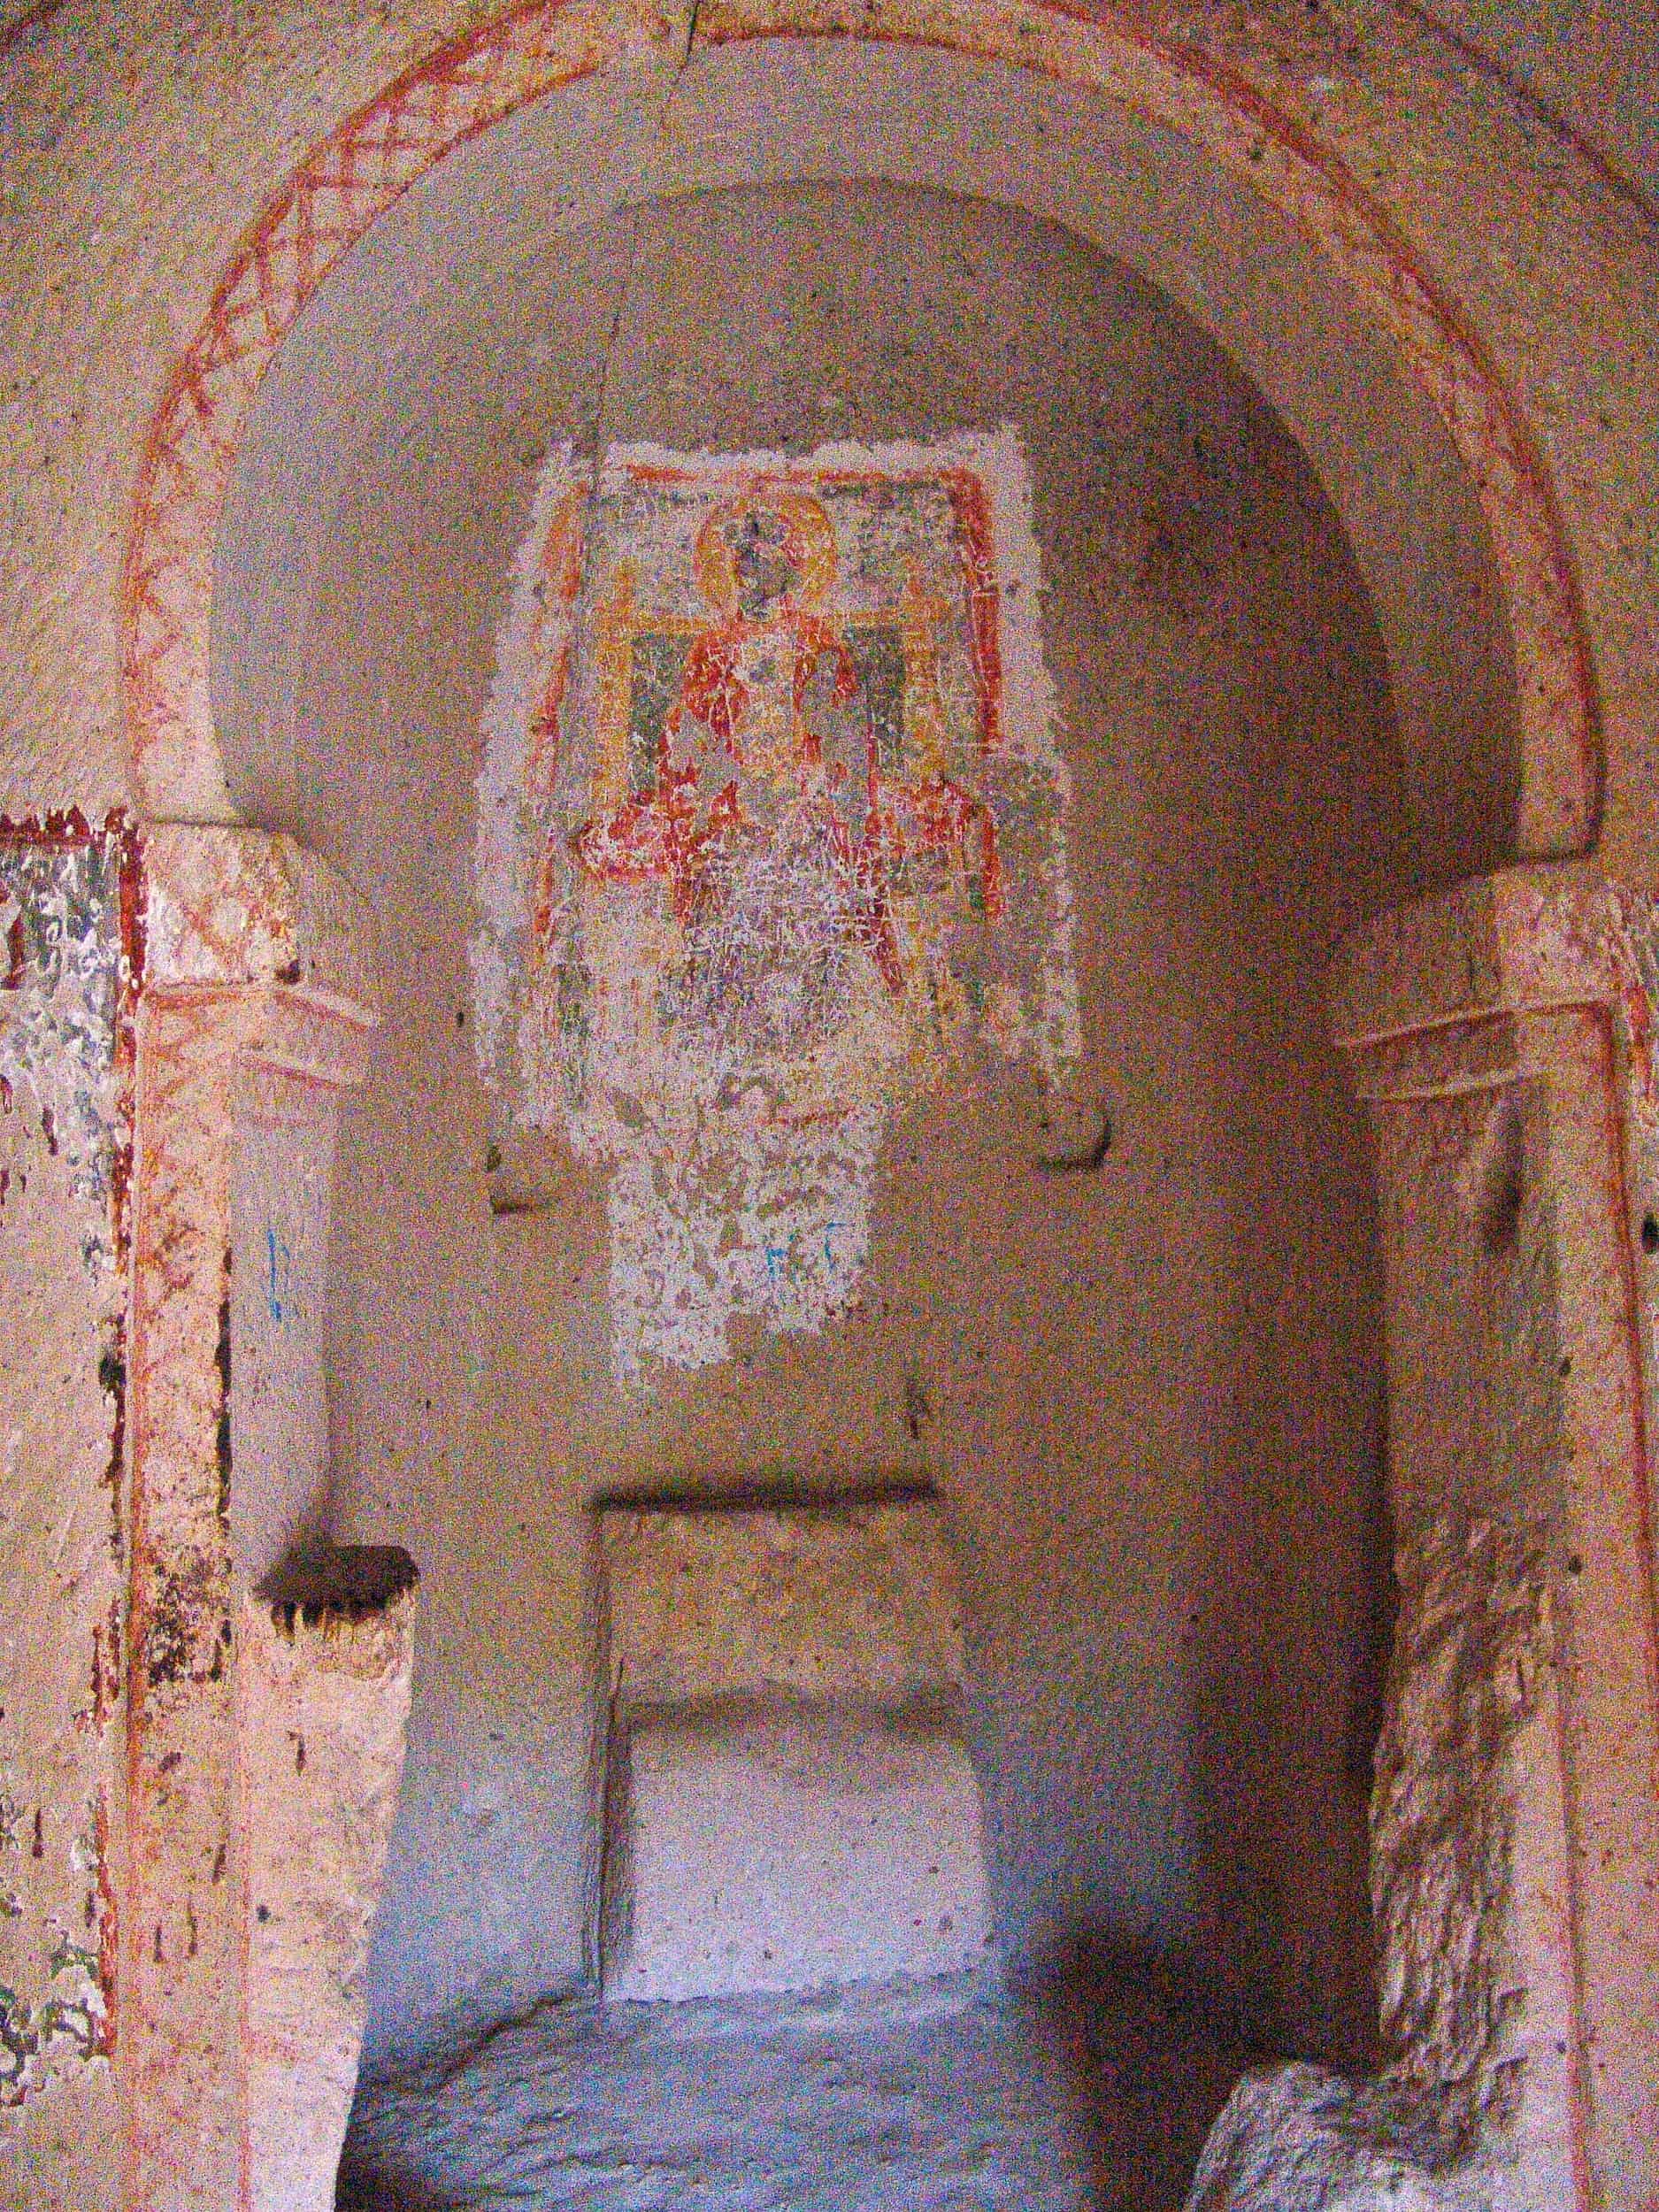 Chapel of Saint Simeon at Paşabağ (Monk's Valley) in Cappadocia, Turkey